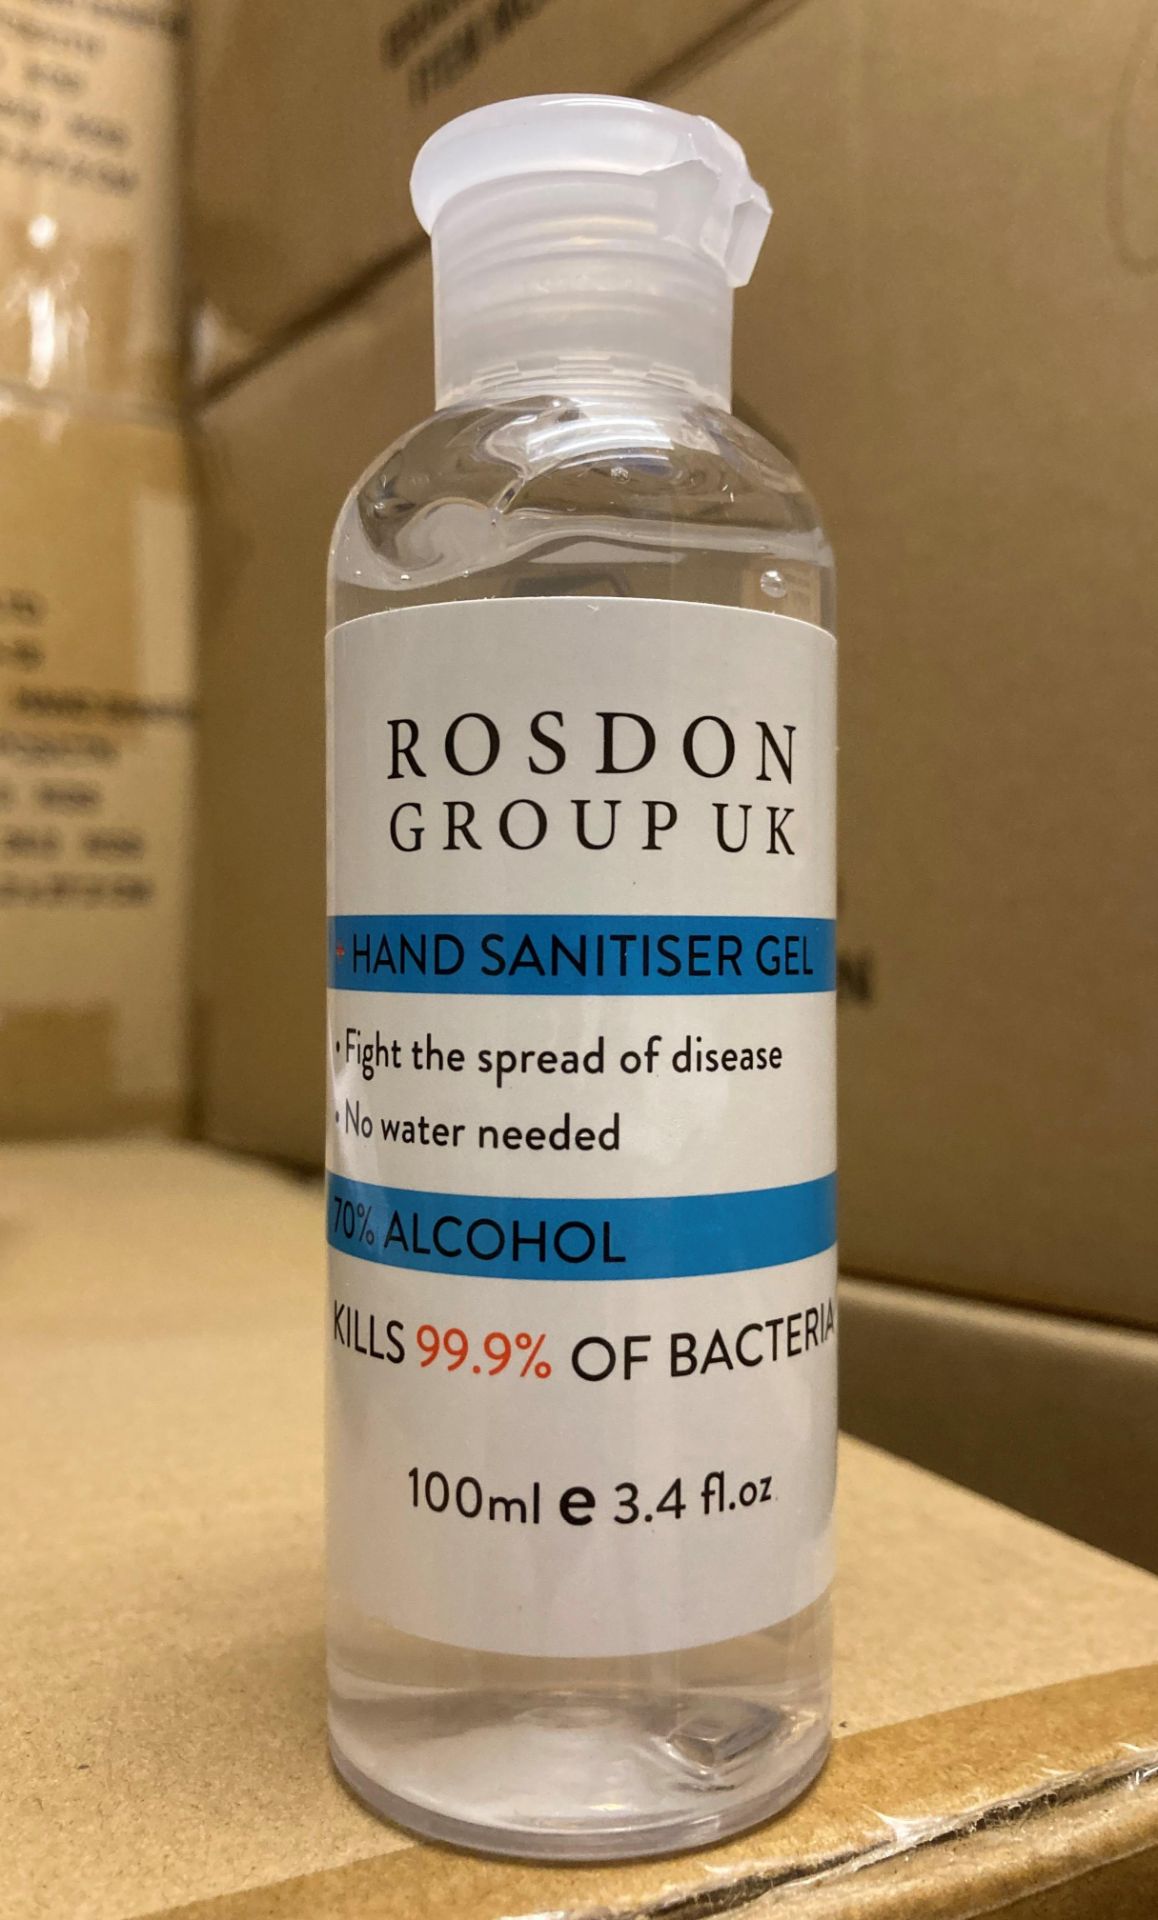 2 x boxes of Rosdon Group Ltd hand sanitiser gel 100ml (192 units per box)